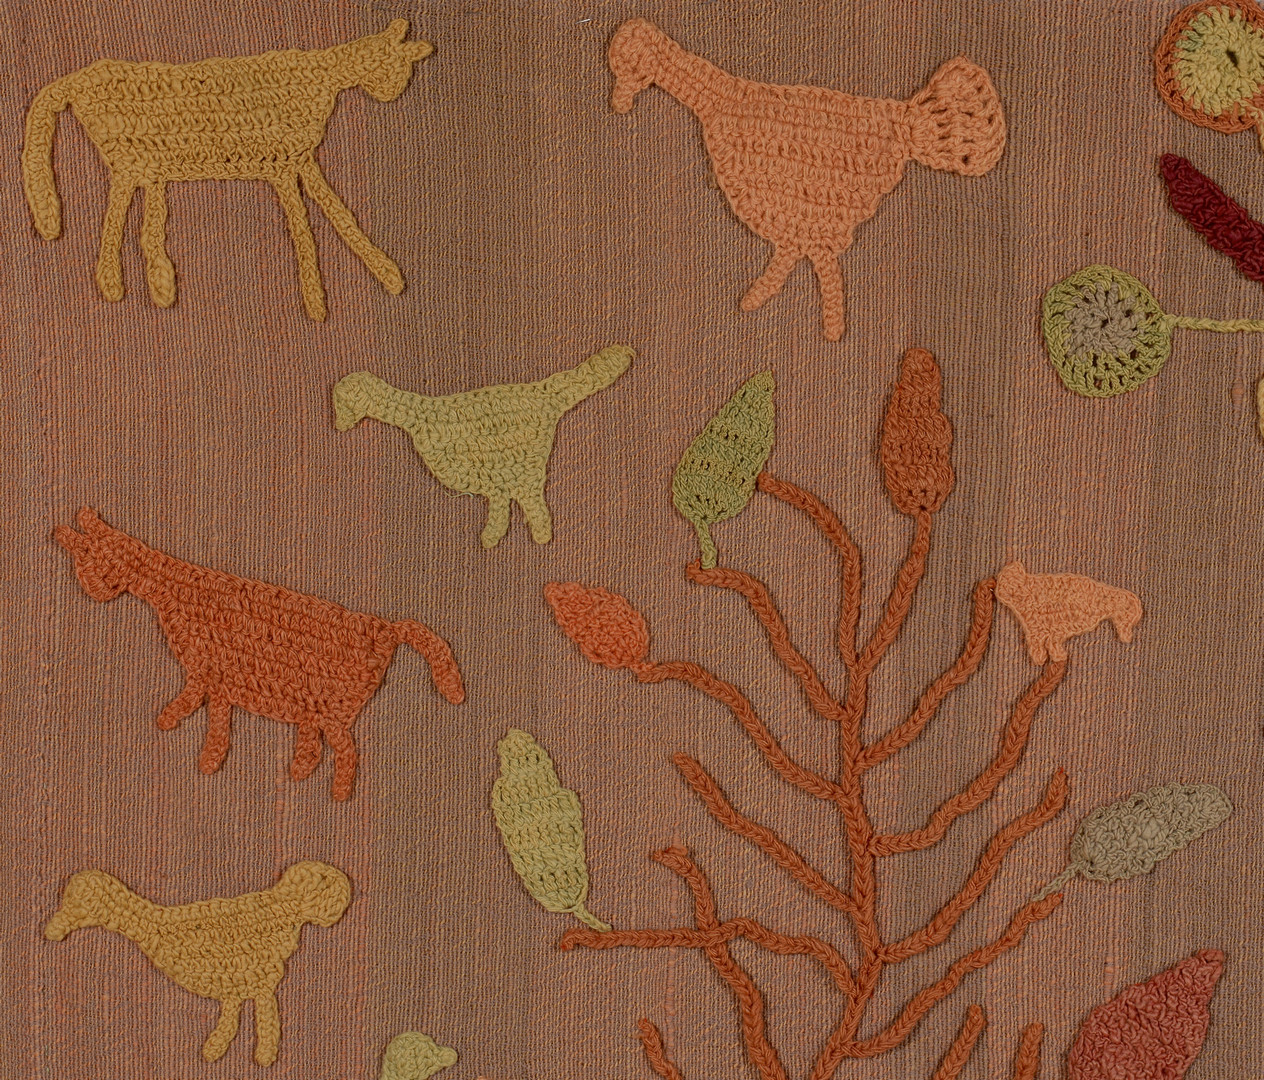 Lot 137: Granny Donaldson Folk Art Textile